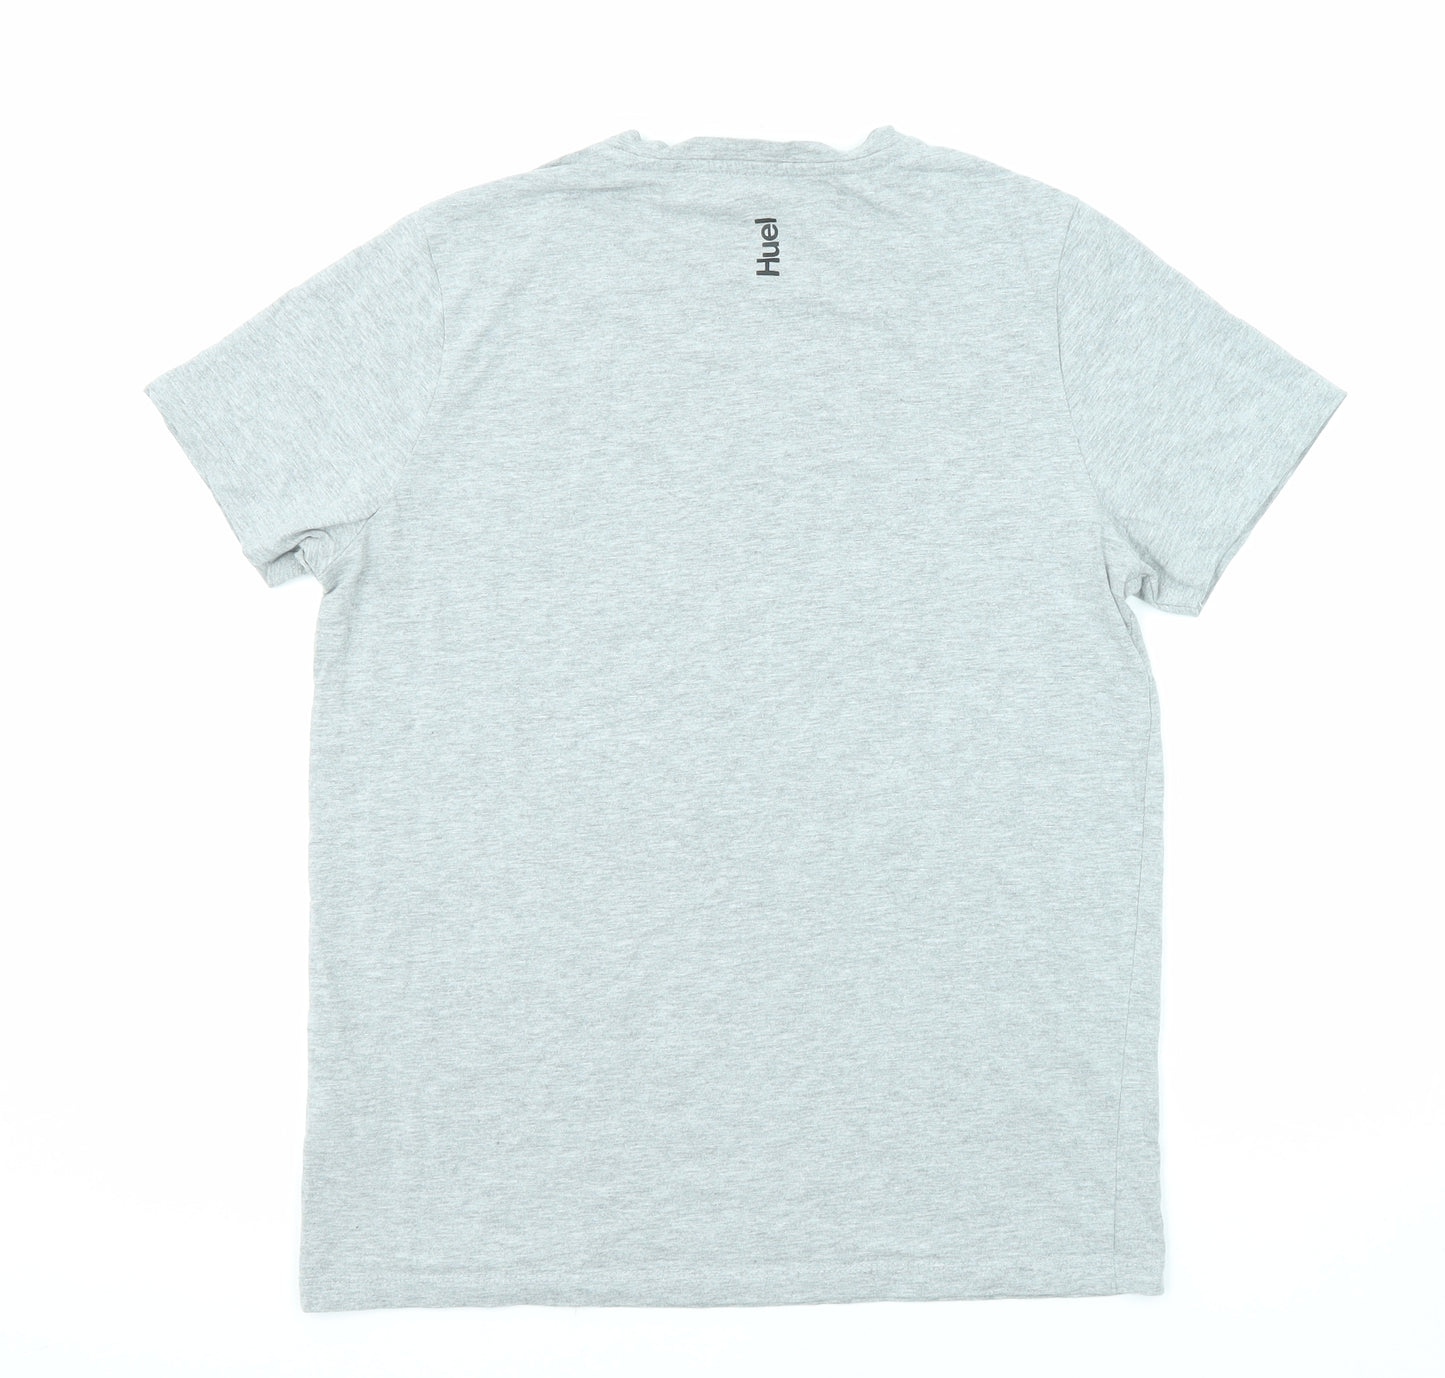 Huel Womens Grey Cotton Basic T-Shirt Size L Round Neck